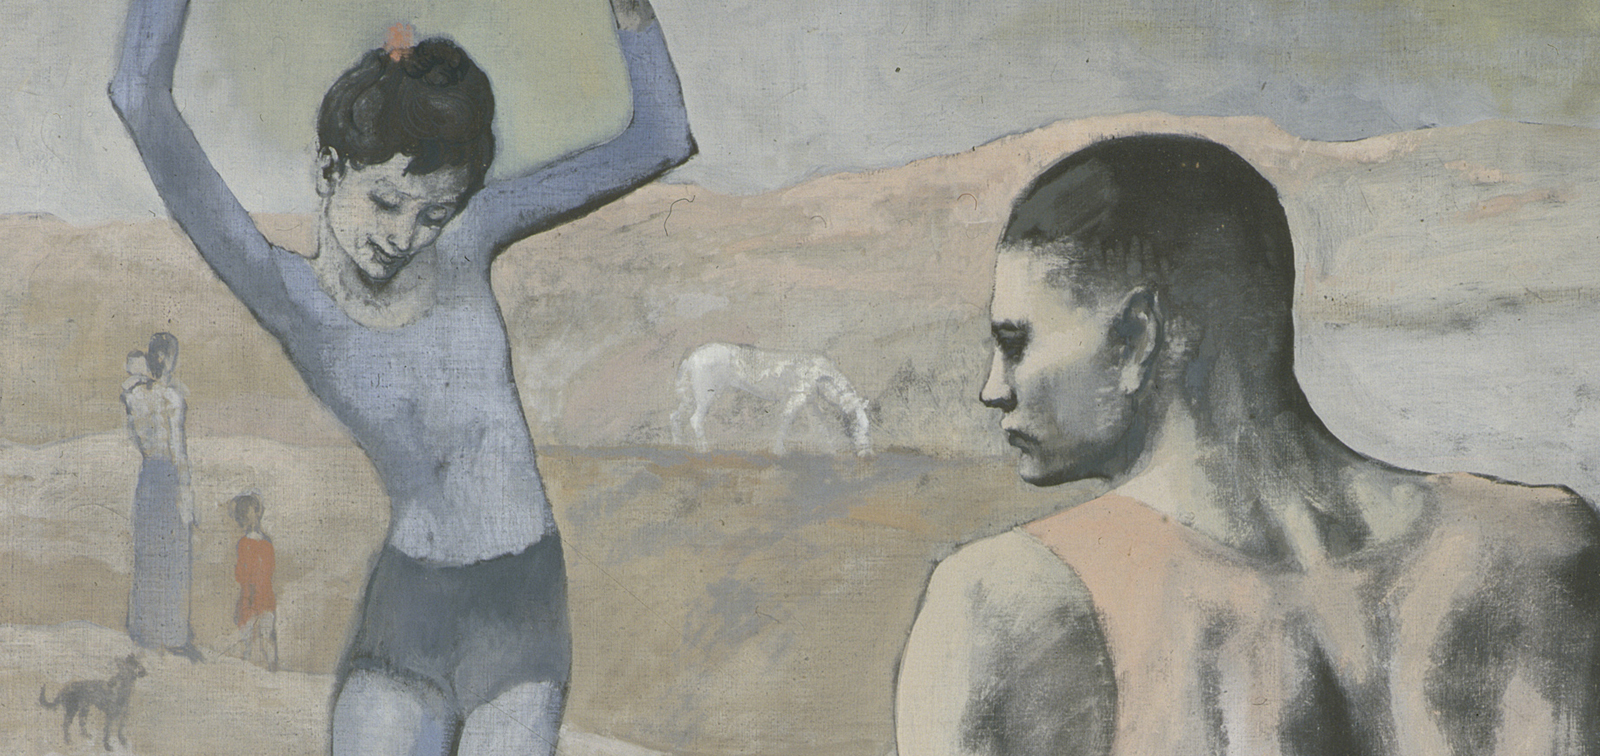 La obra invitada: La acróbata de la bola, Picasso